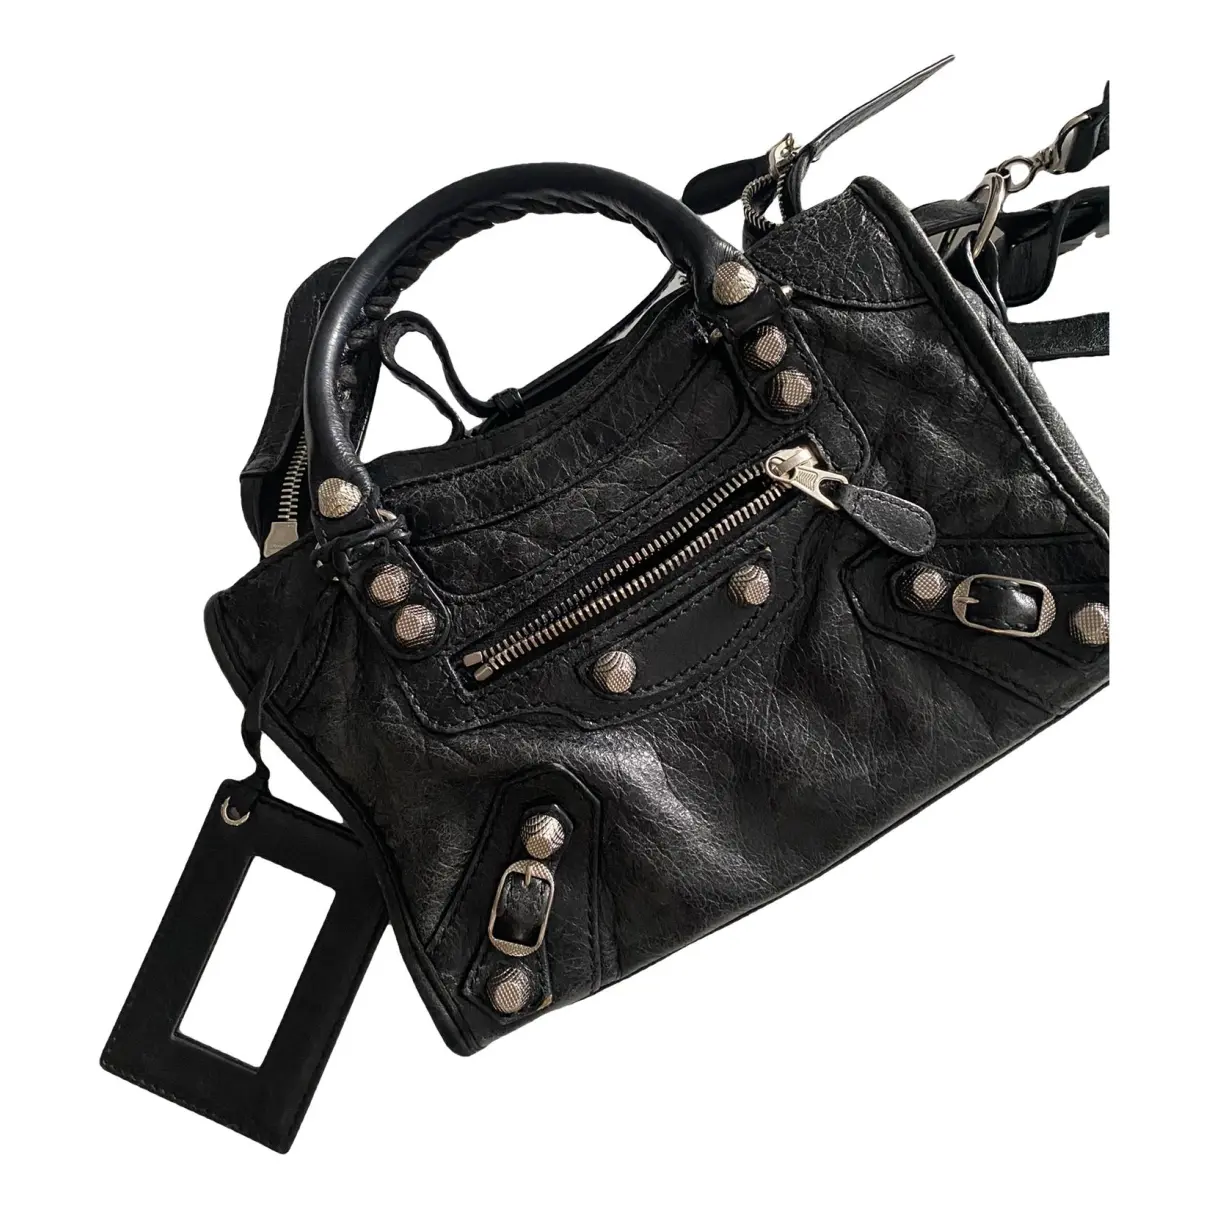 City leather handbag